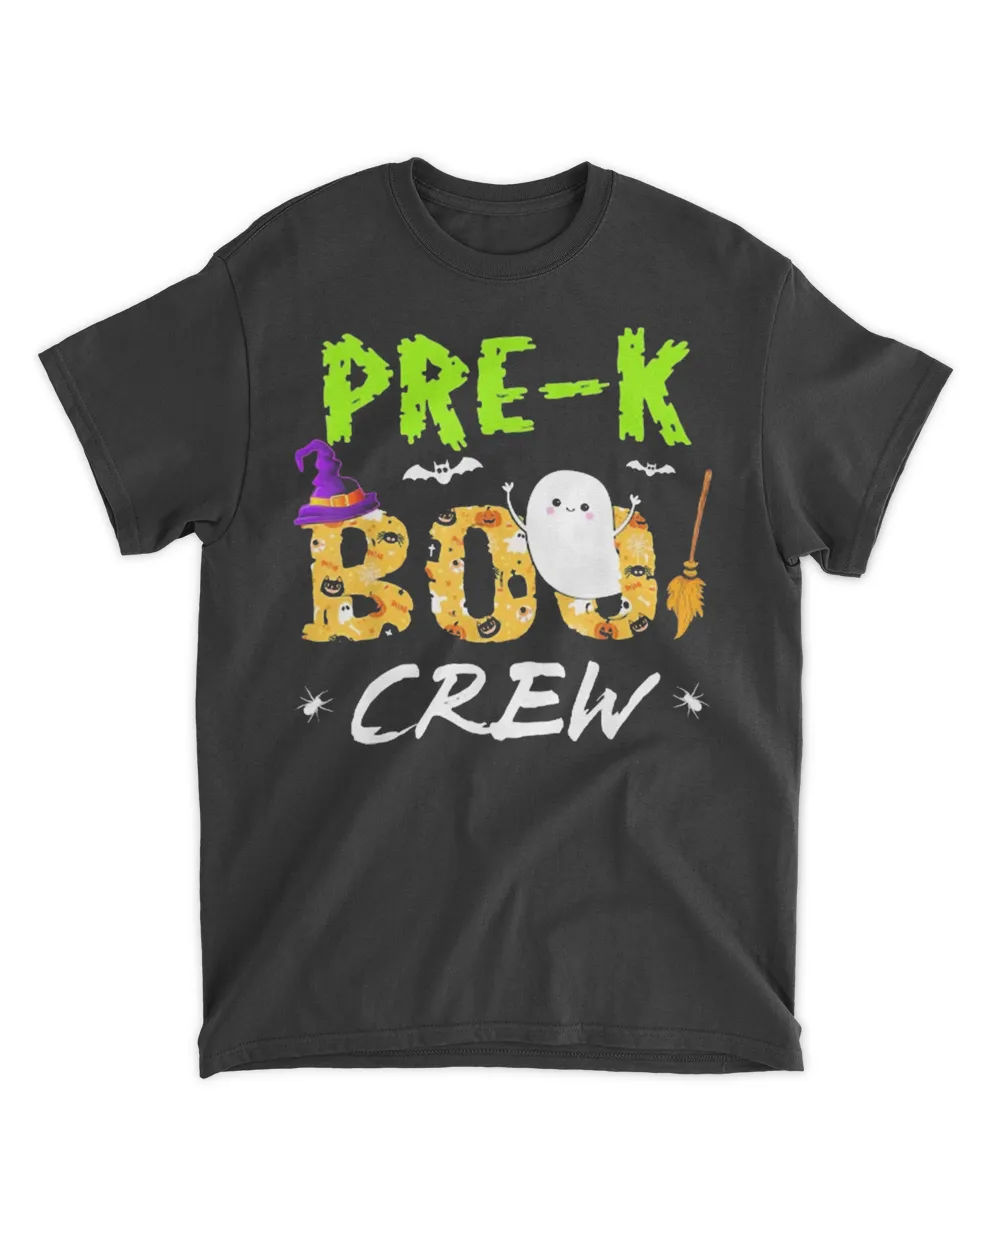 Pre K Boo Crew Teacher Funny Costume Halloween Ghost shirt